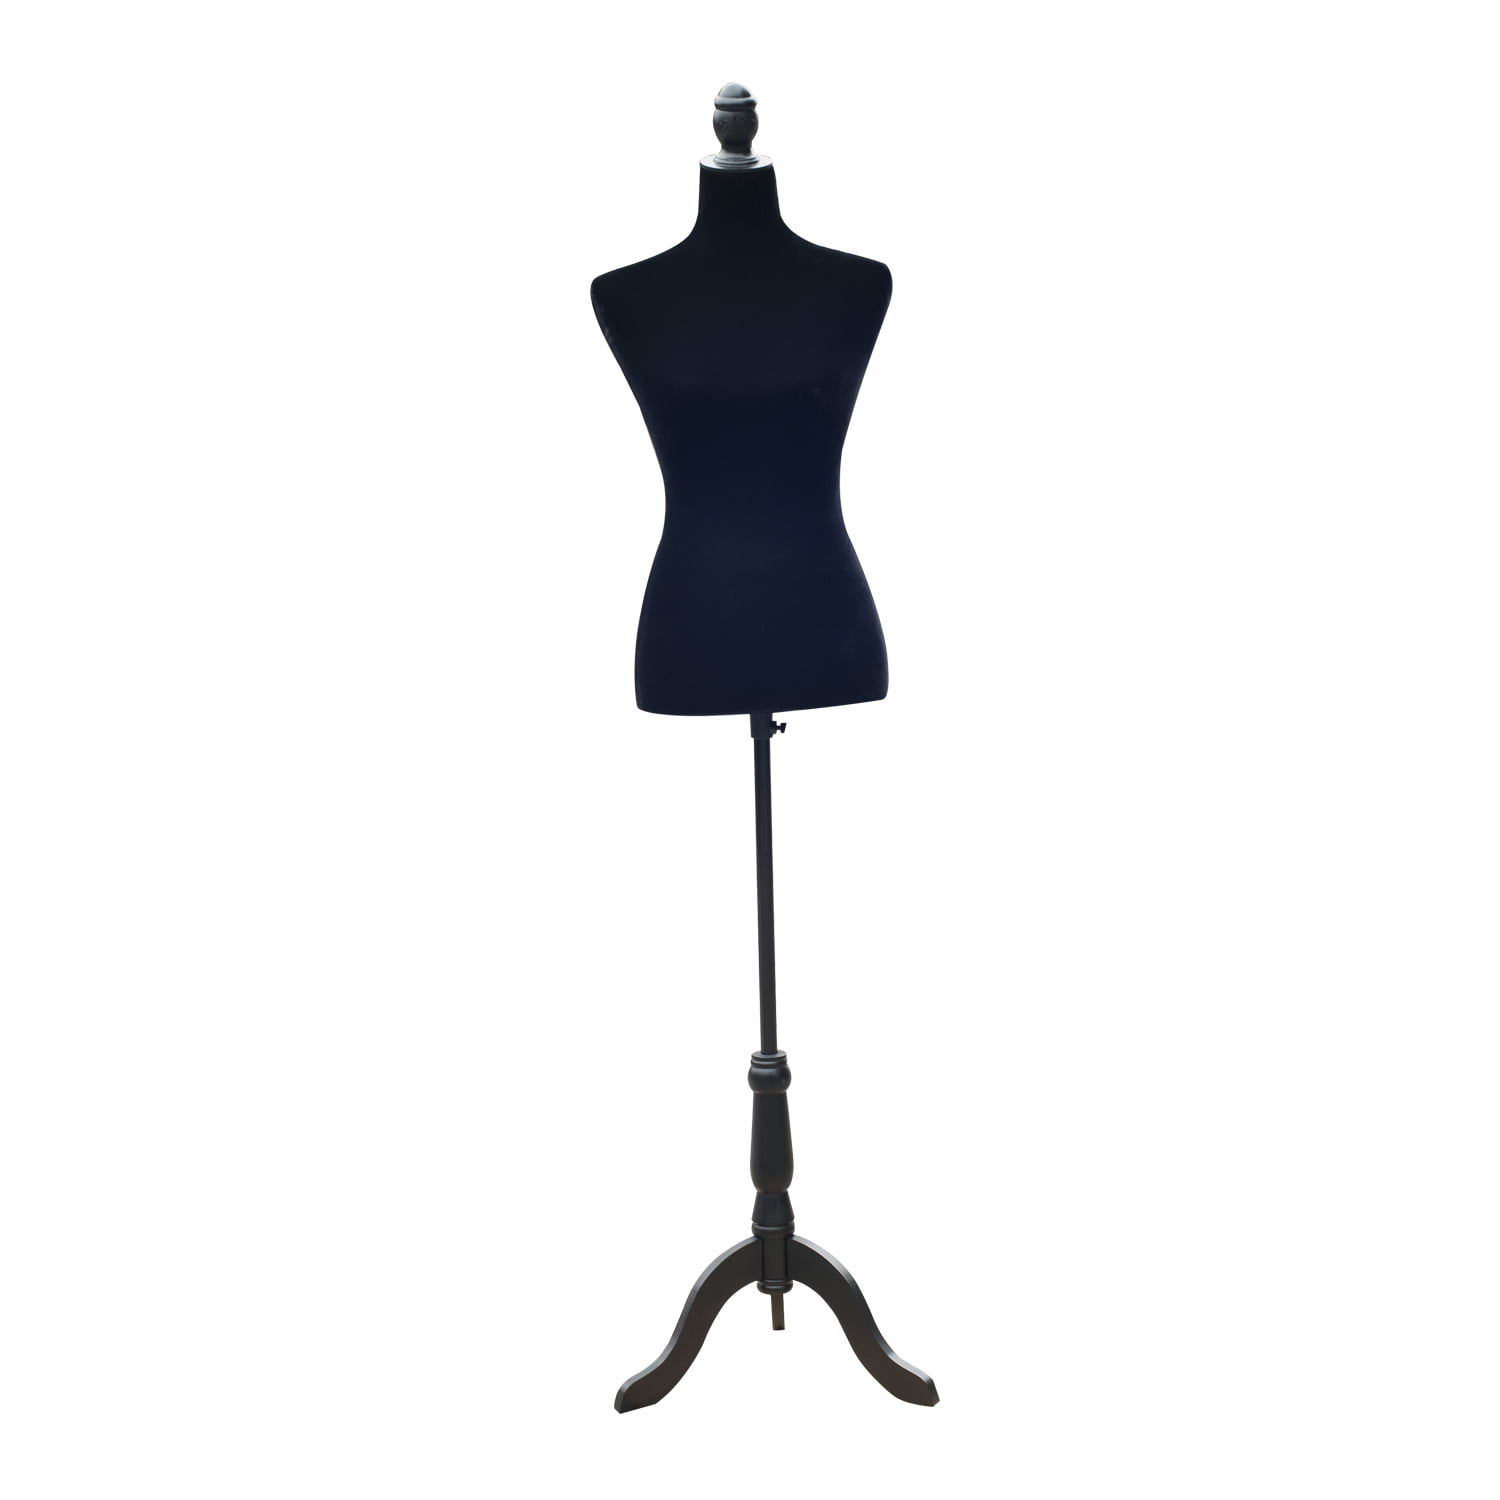 1:12 Black Metal Sewing Dress Form Schaufensterpuppe Modell Display Stand